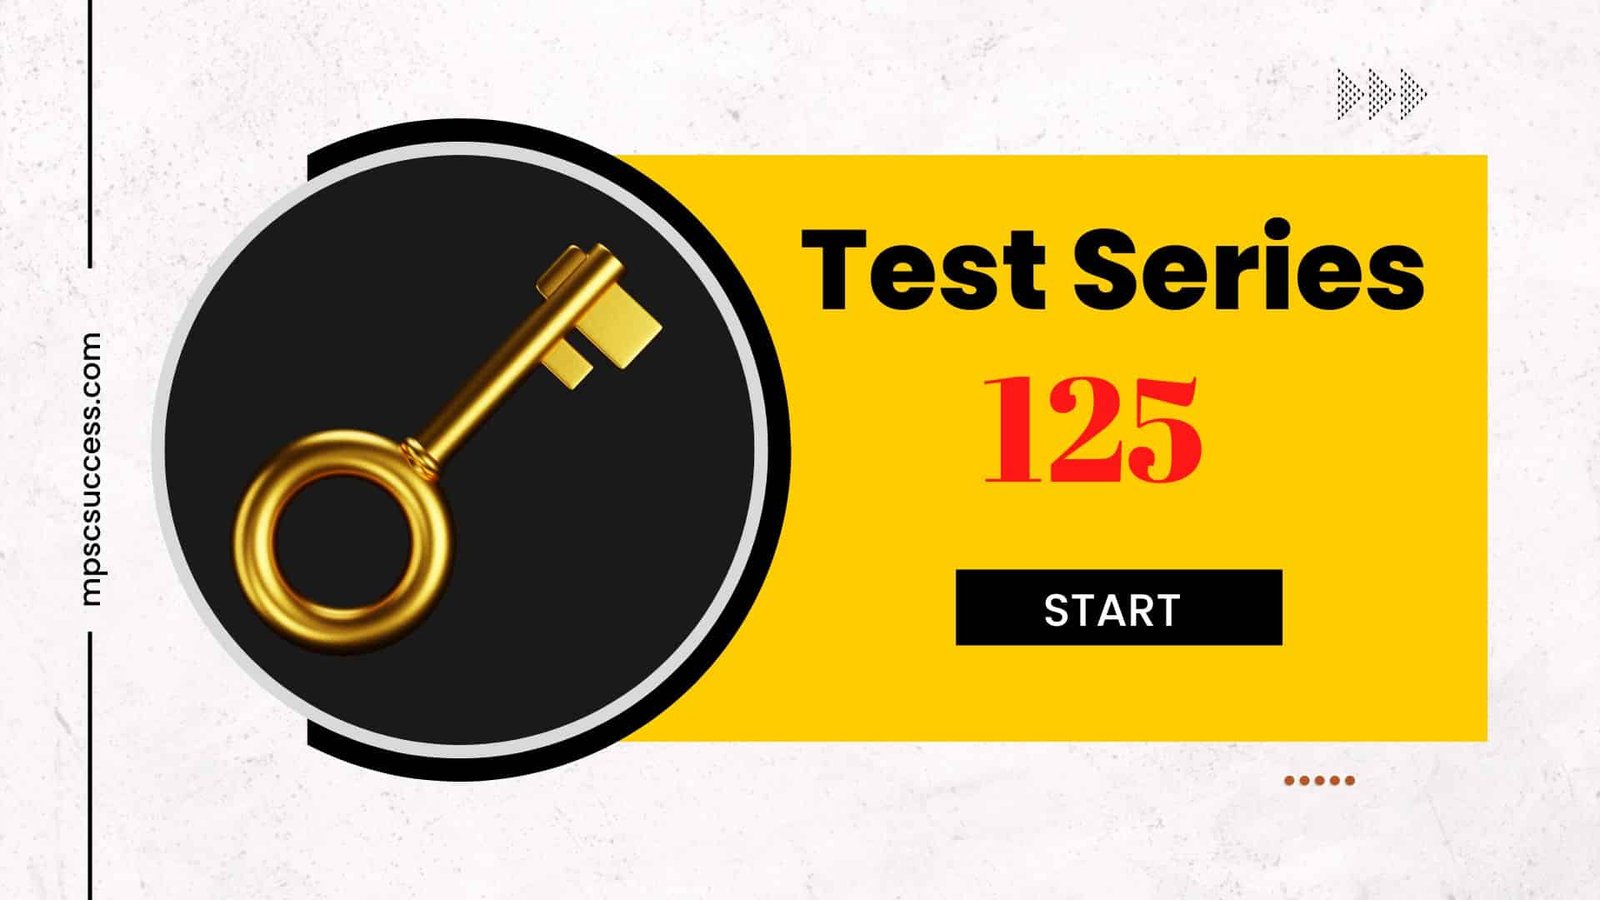 Test Series 125